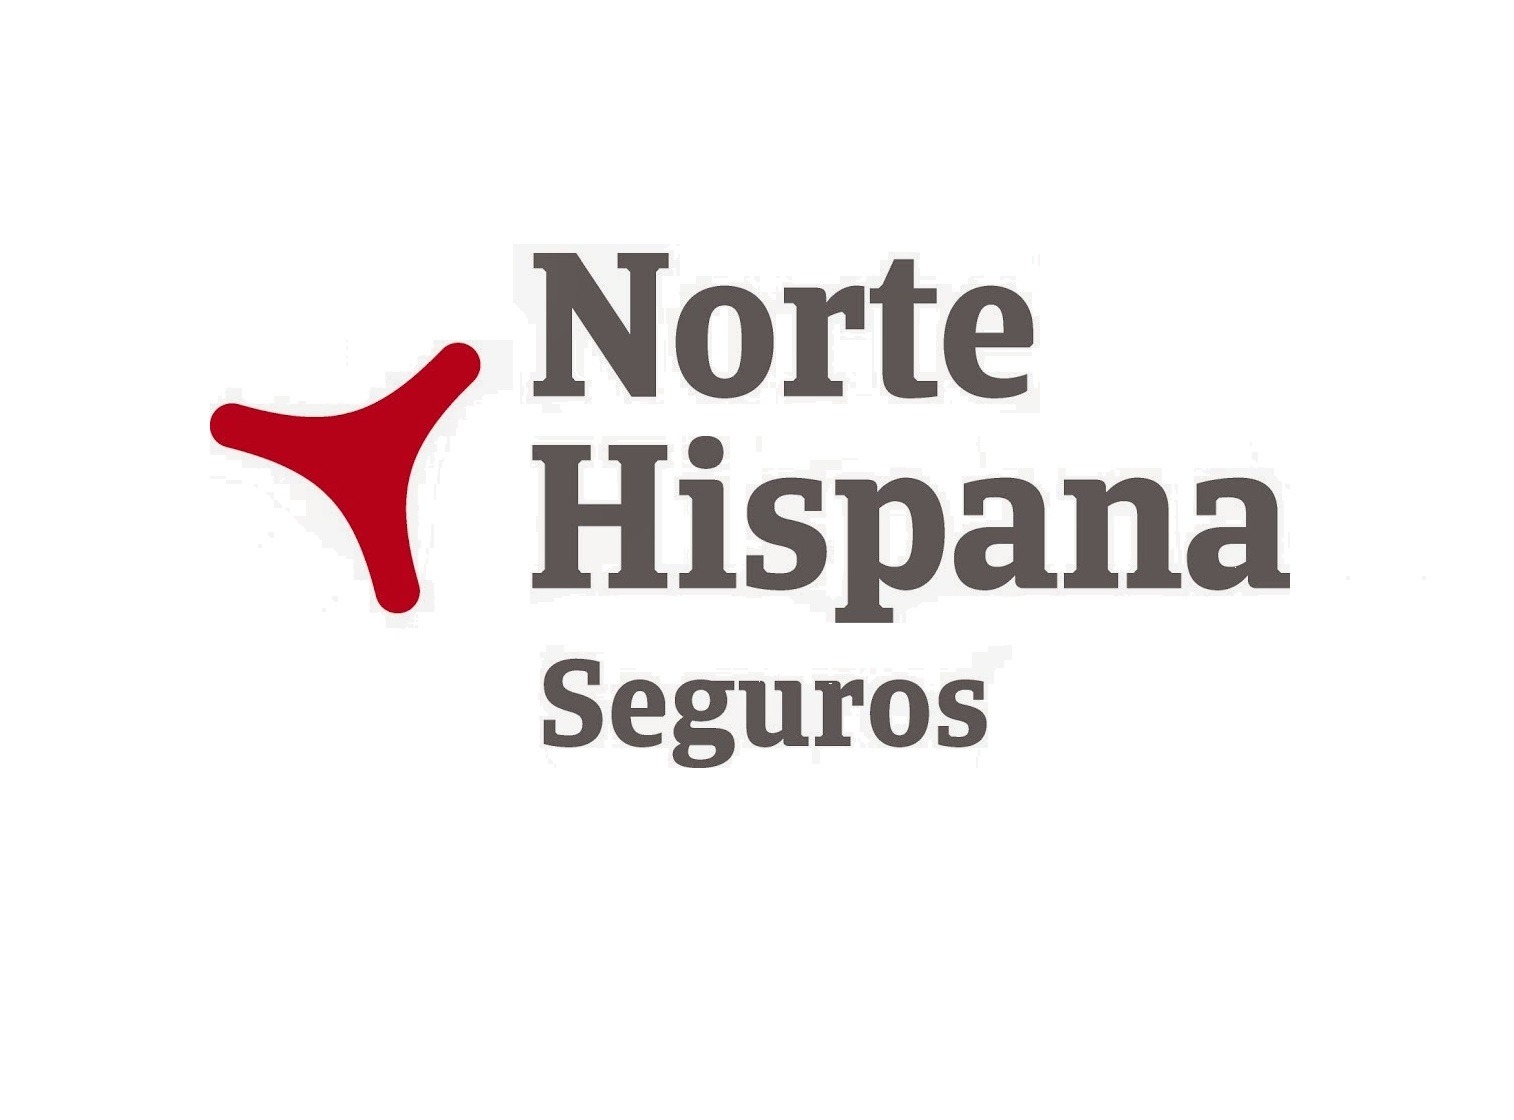 Norte hispana